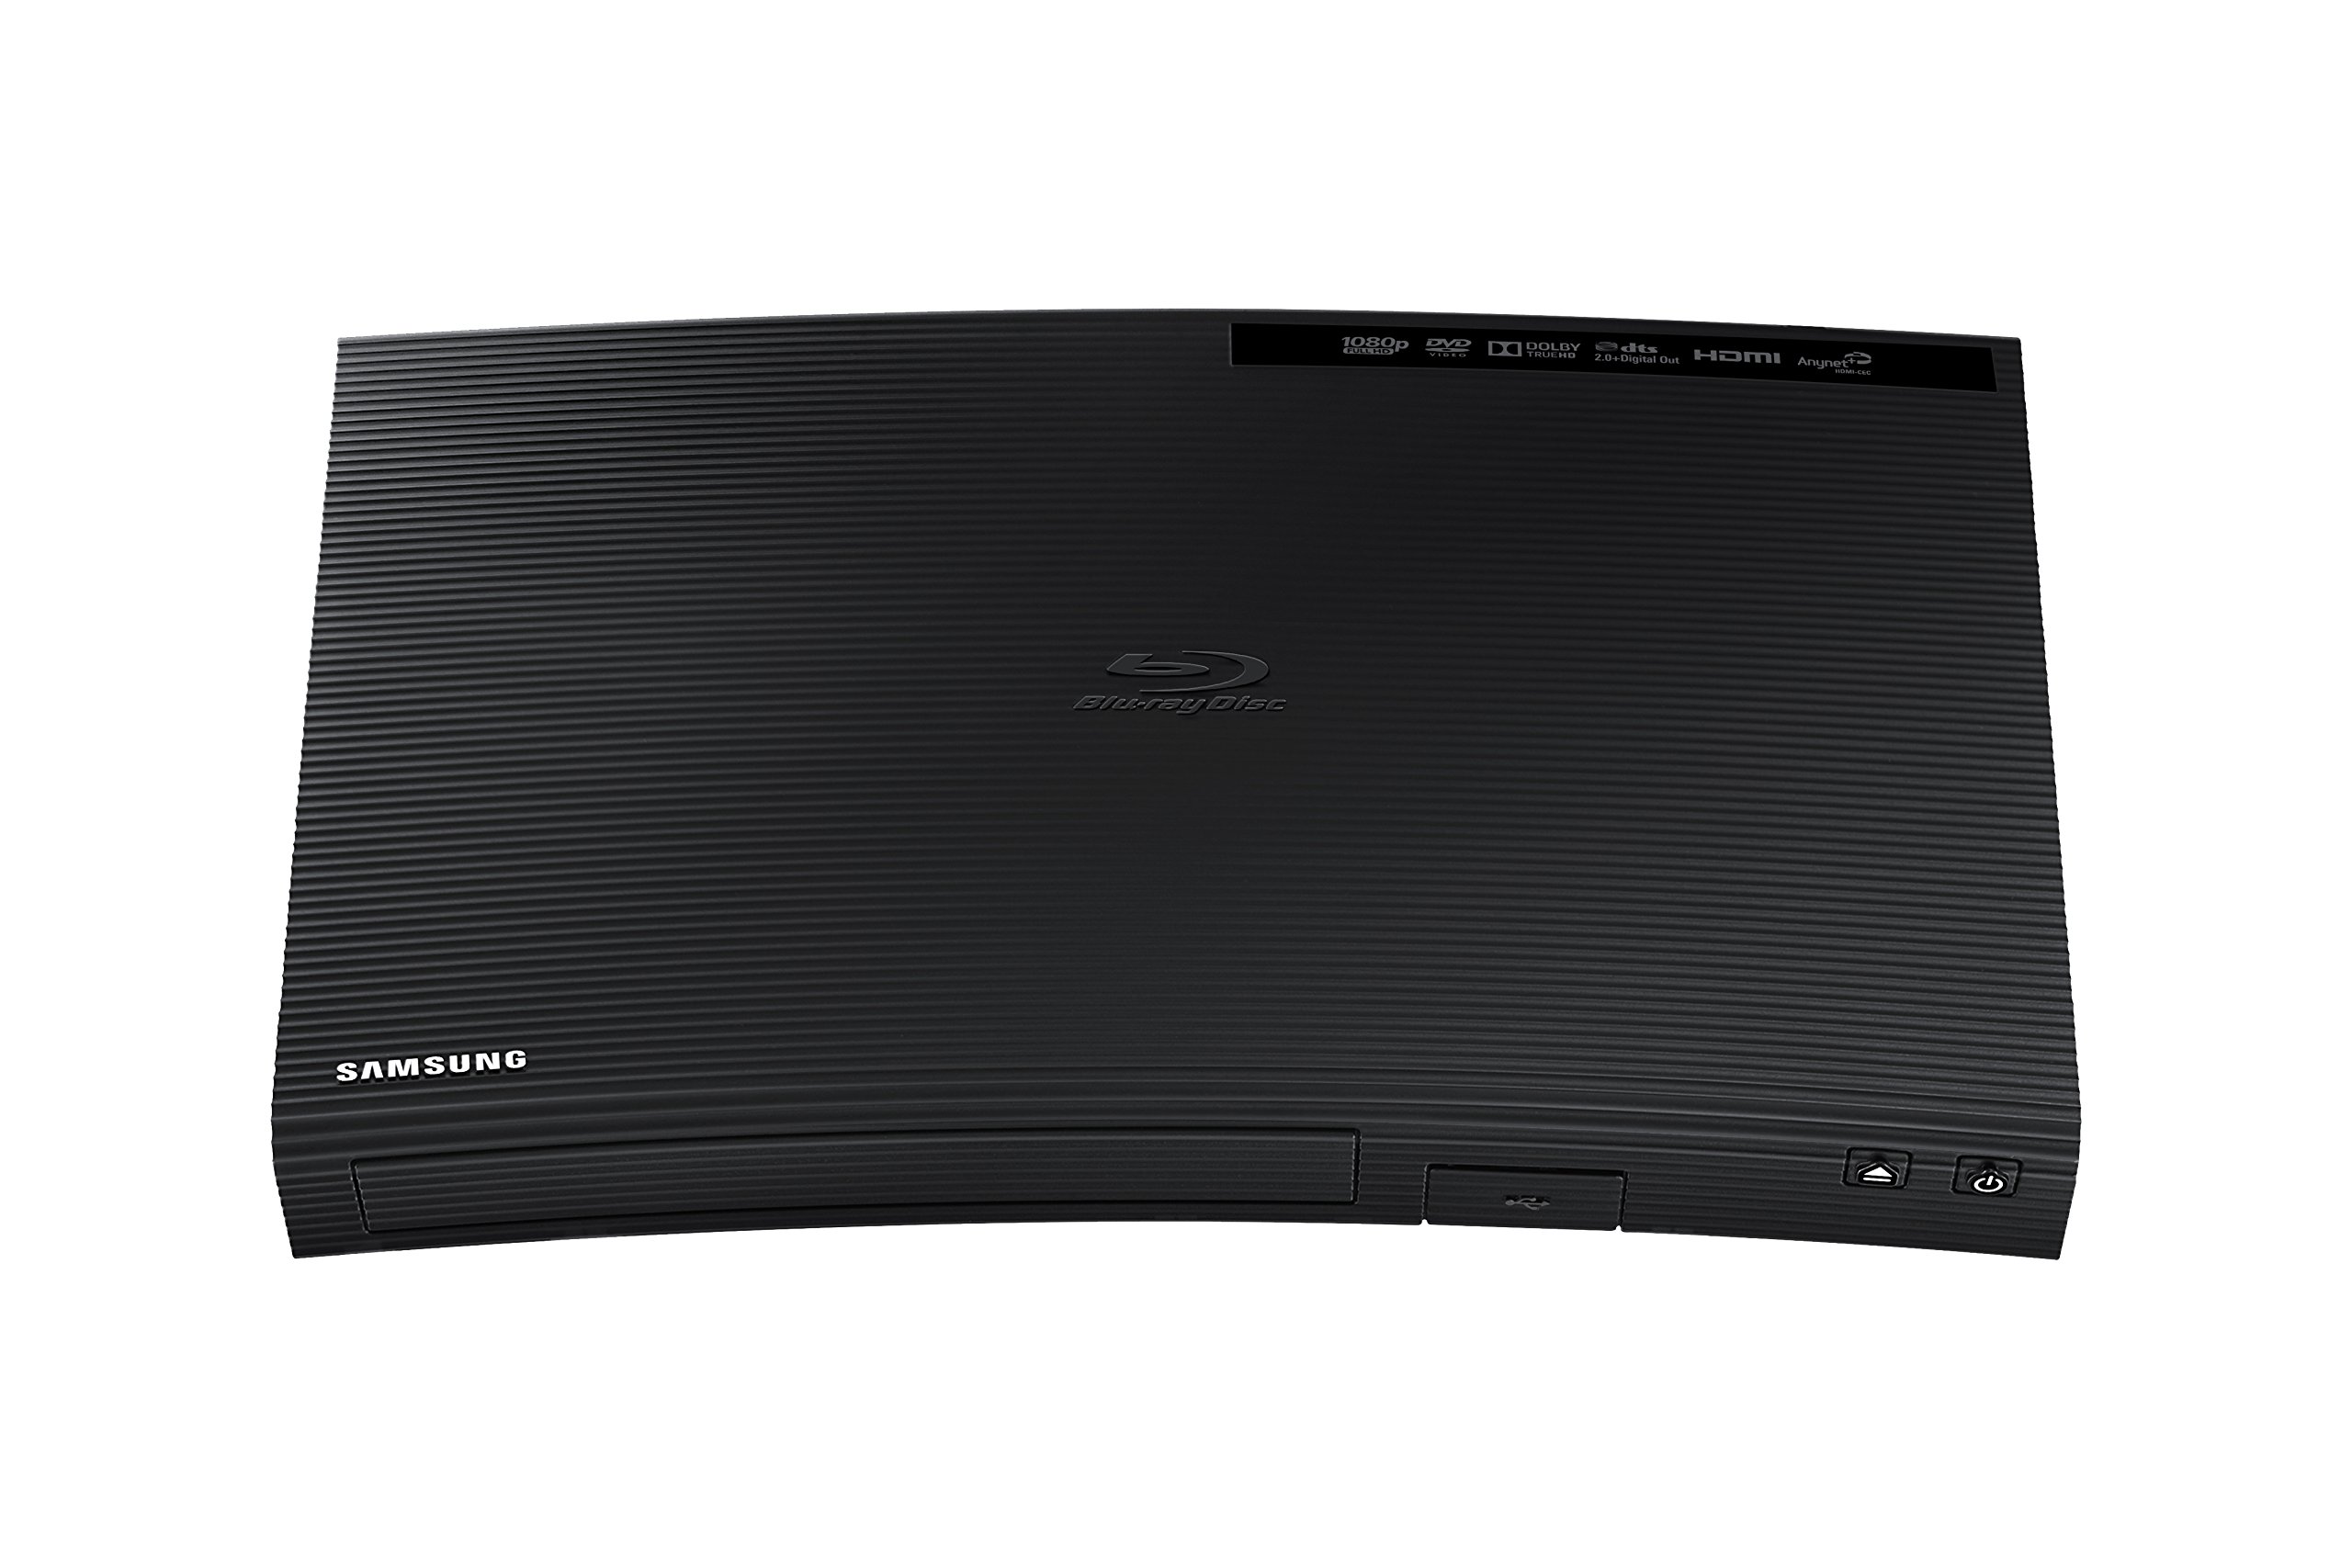 Samsung BD-J5100 1080p 1 Disc(s) Blu-ray Disc Player Model BD-J5100/ZA